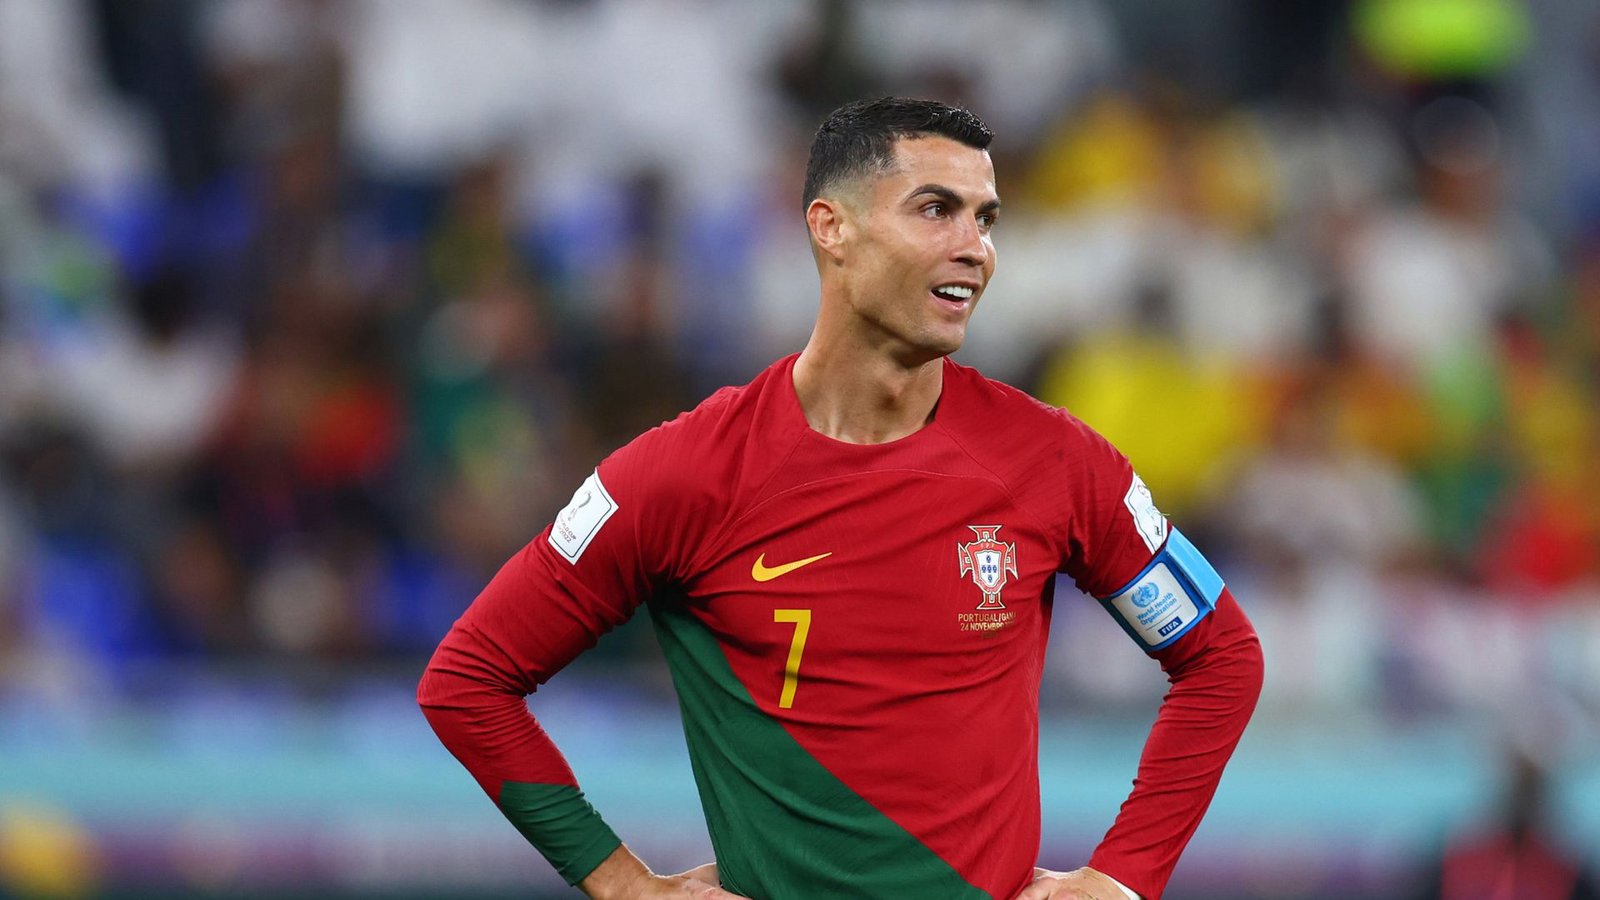 Cristiano Ronaldo beim WM-Auftakt mit Portugal gegen Ghana.Foto: dpa/Tom Weller